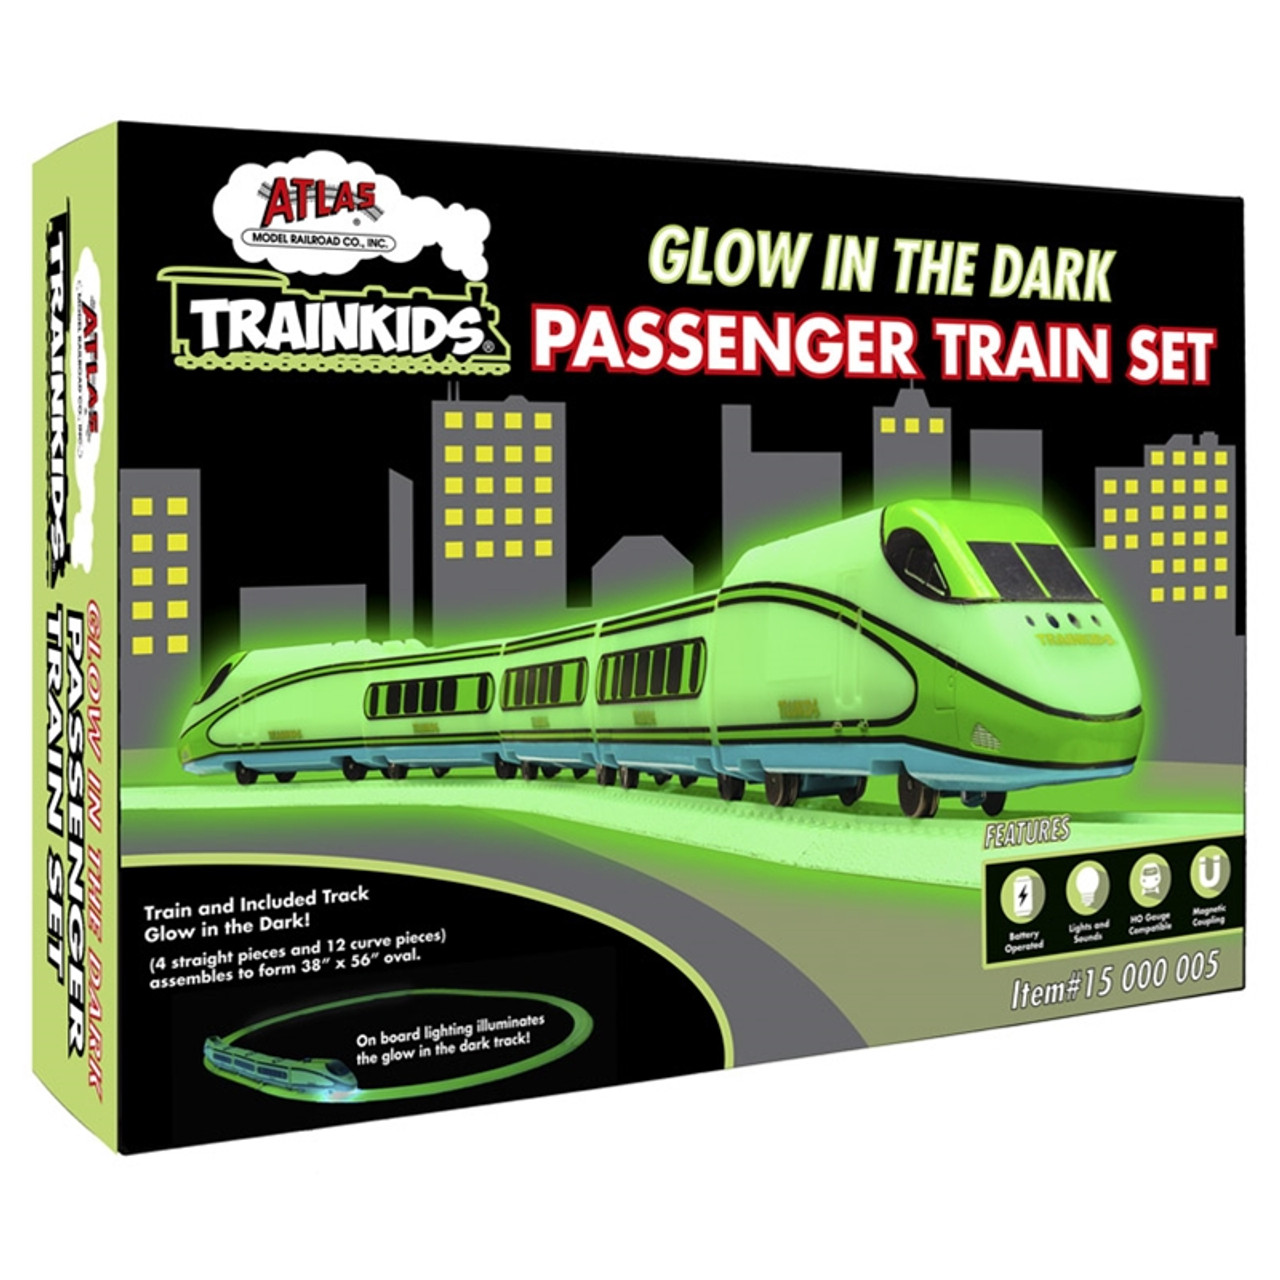 Atlas 15 000 100 TrainKids Glow In The Dark Passenger Train Set Box